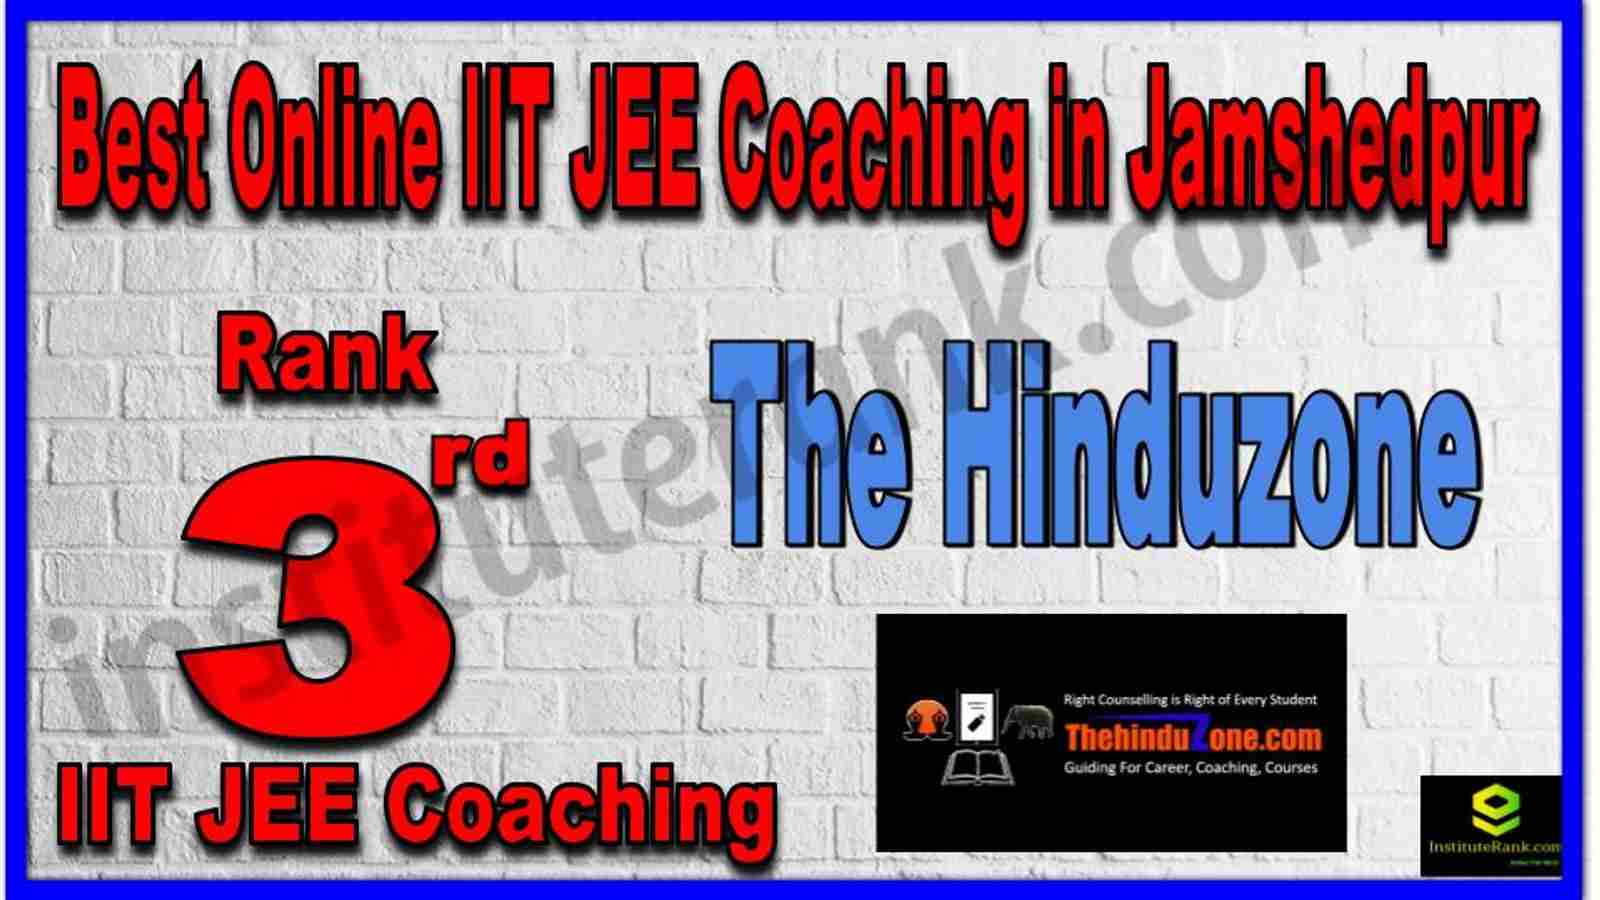 Rank 3rd Best Online IIT JEE Coaching in Jamshedpur